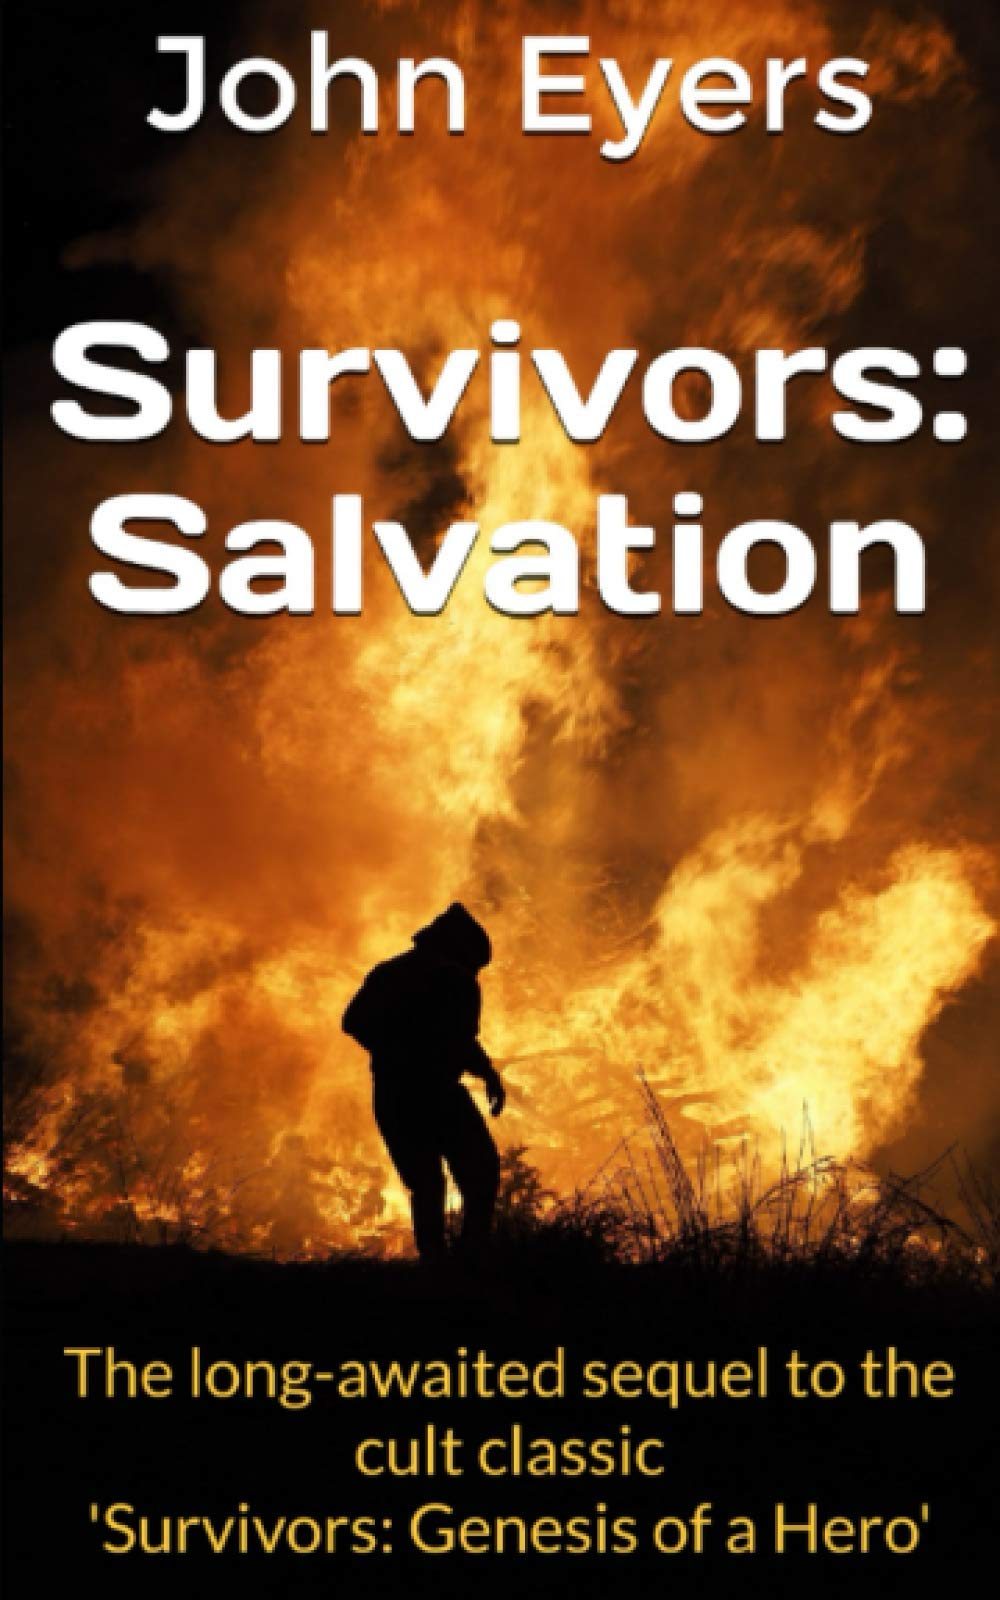 Cover of John Eyers - Survivors: Salvation - paperback edition